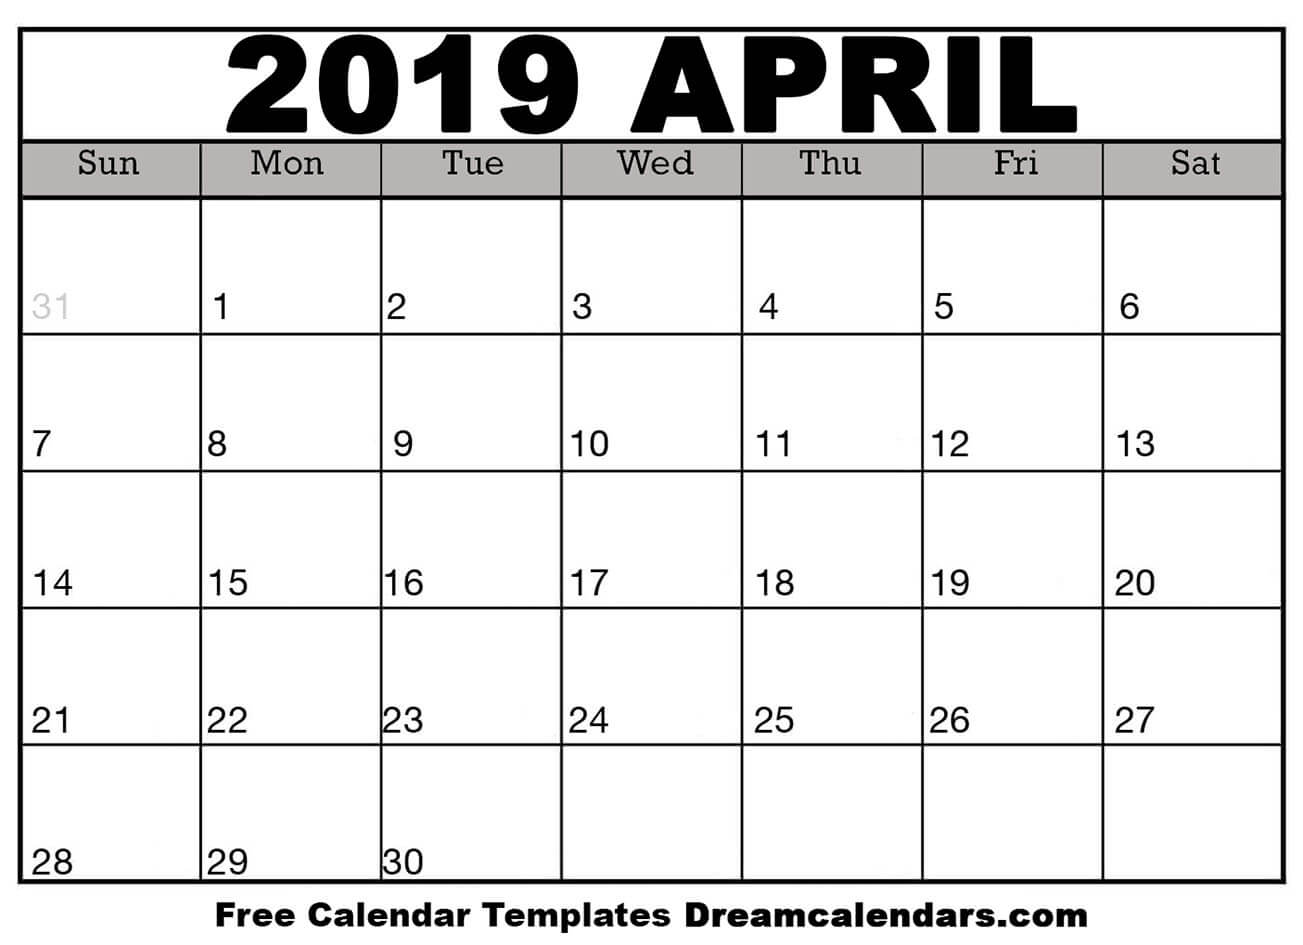 April 2019 calendar free blank printable templates